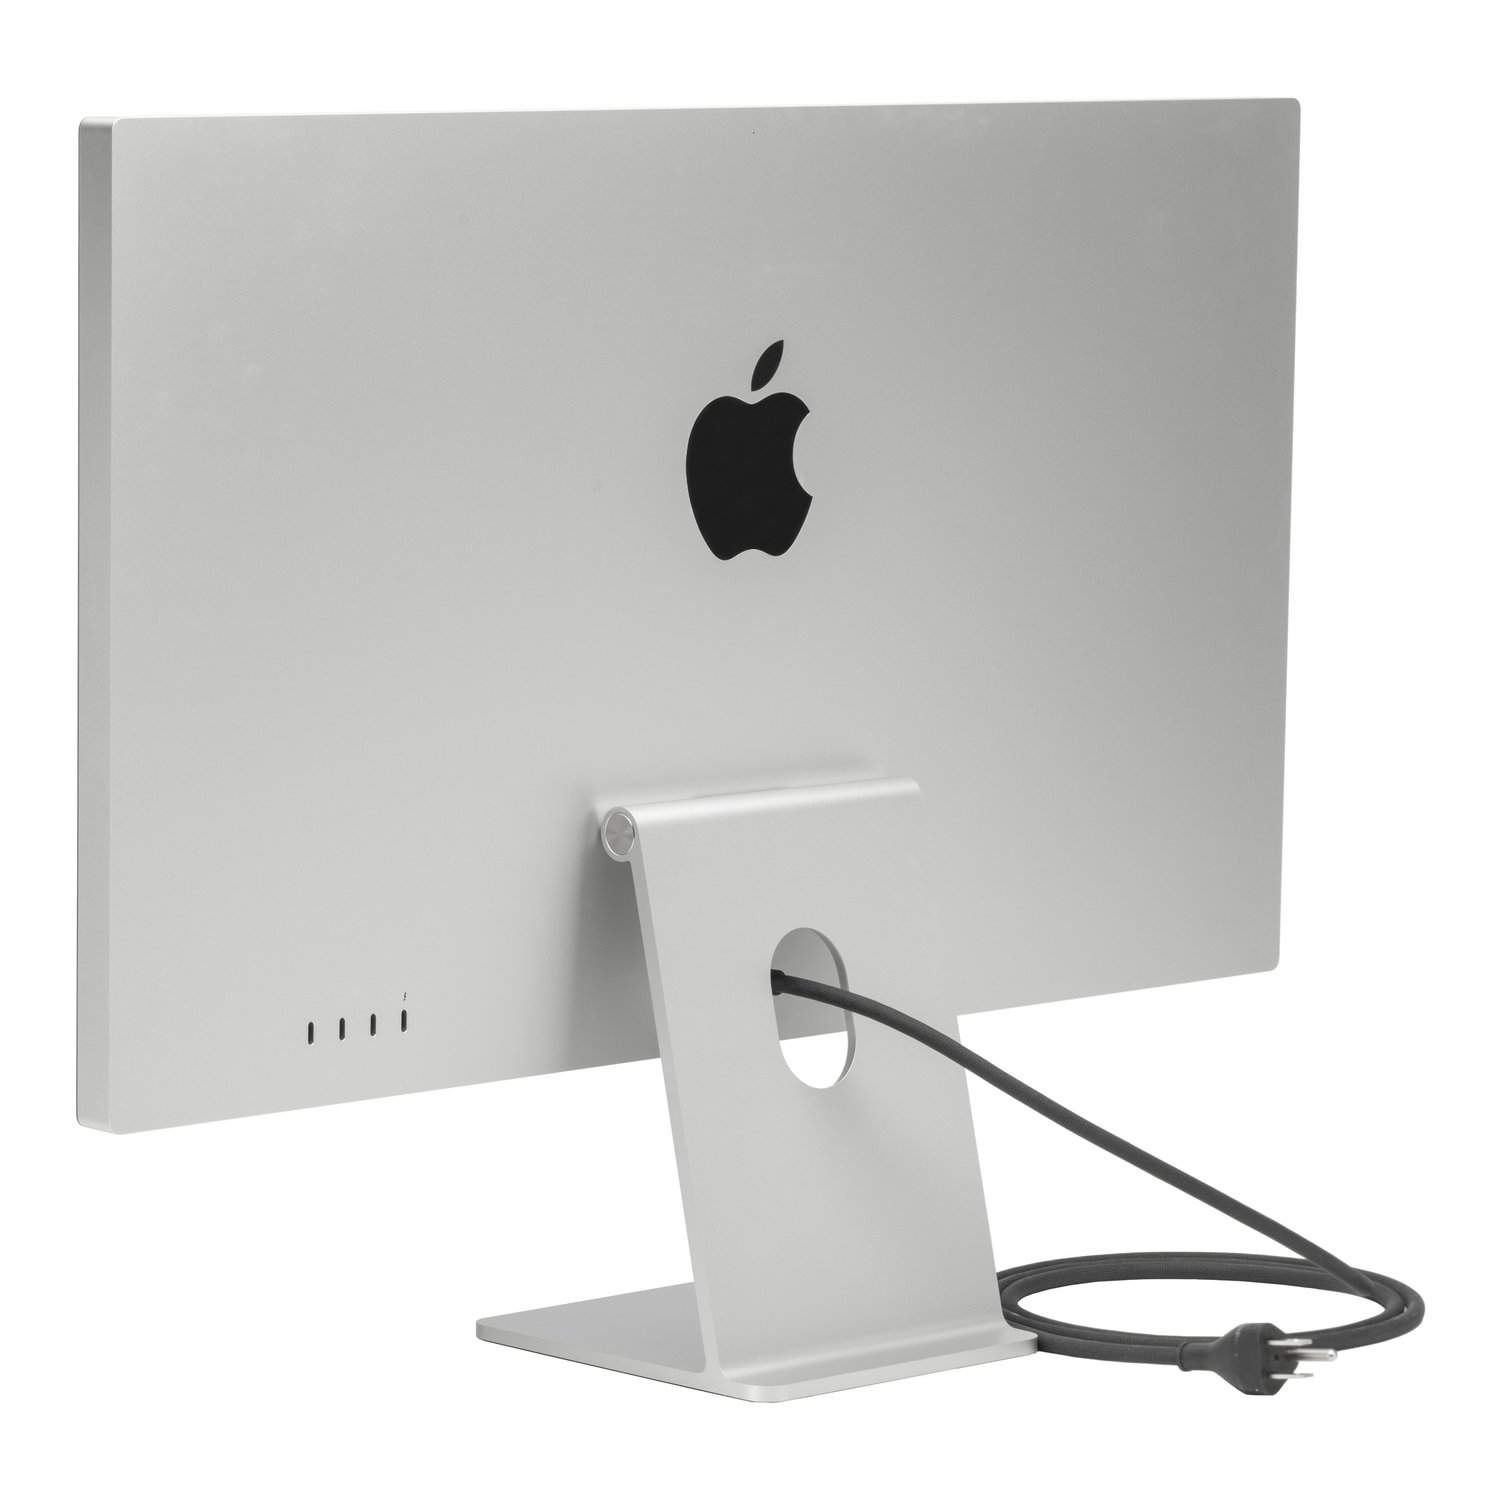 MK0U3LL/A Apple Studio with... at 27-inch Display